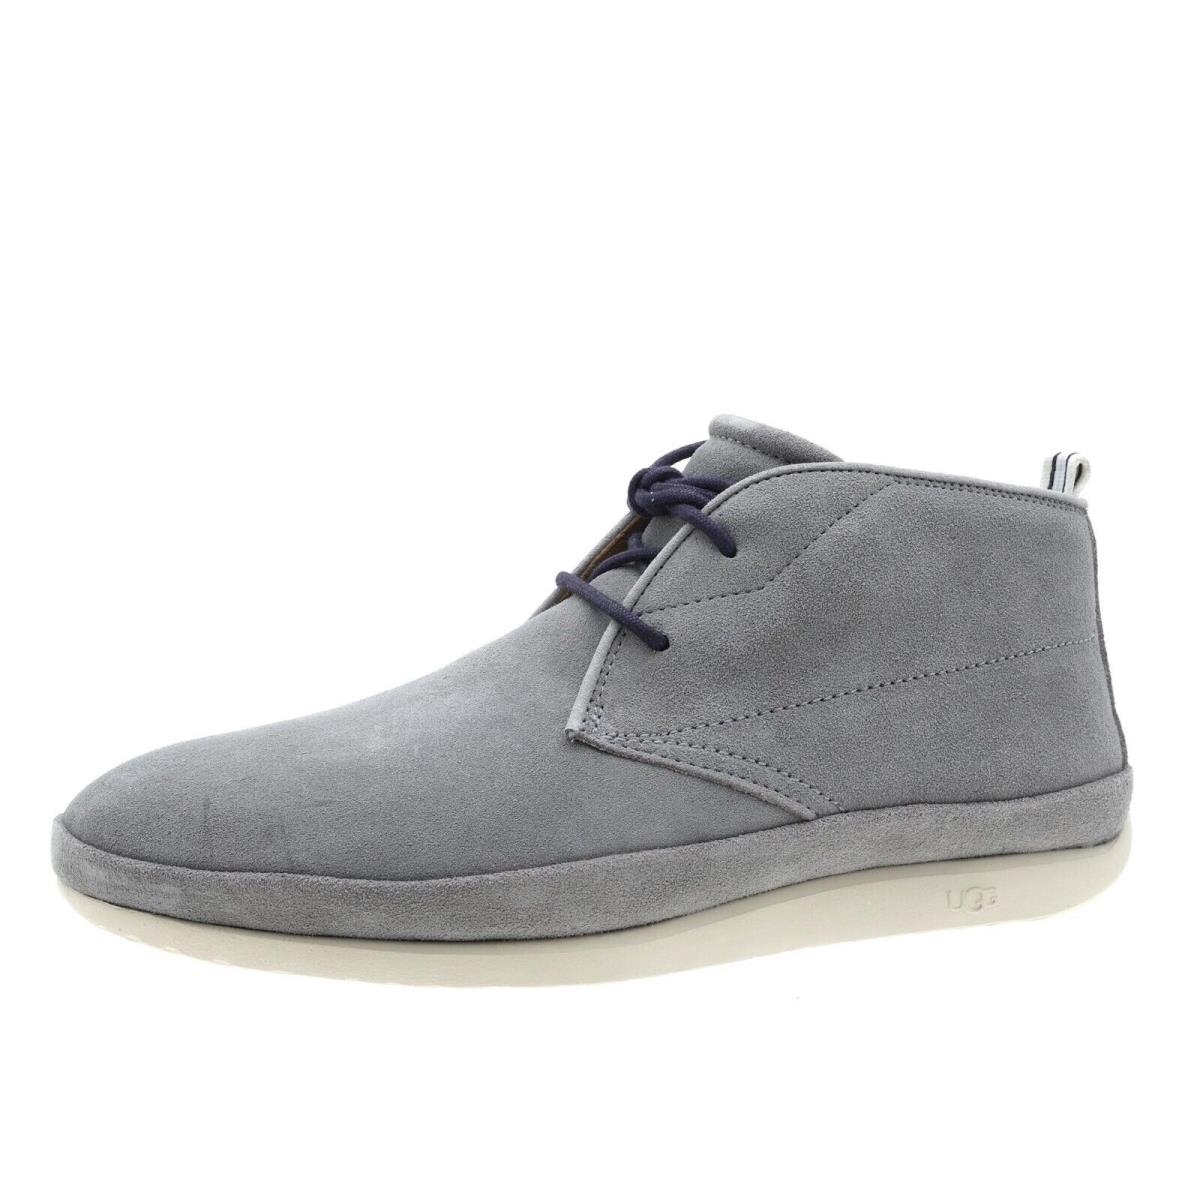 Ugg N3470 Cali Chukka Seal Men s Grey Shoes Size US 8 EU 40.5